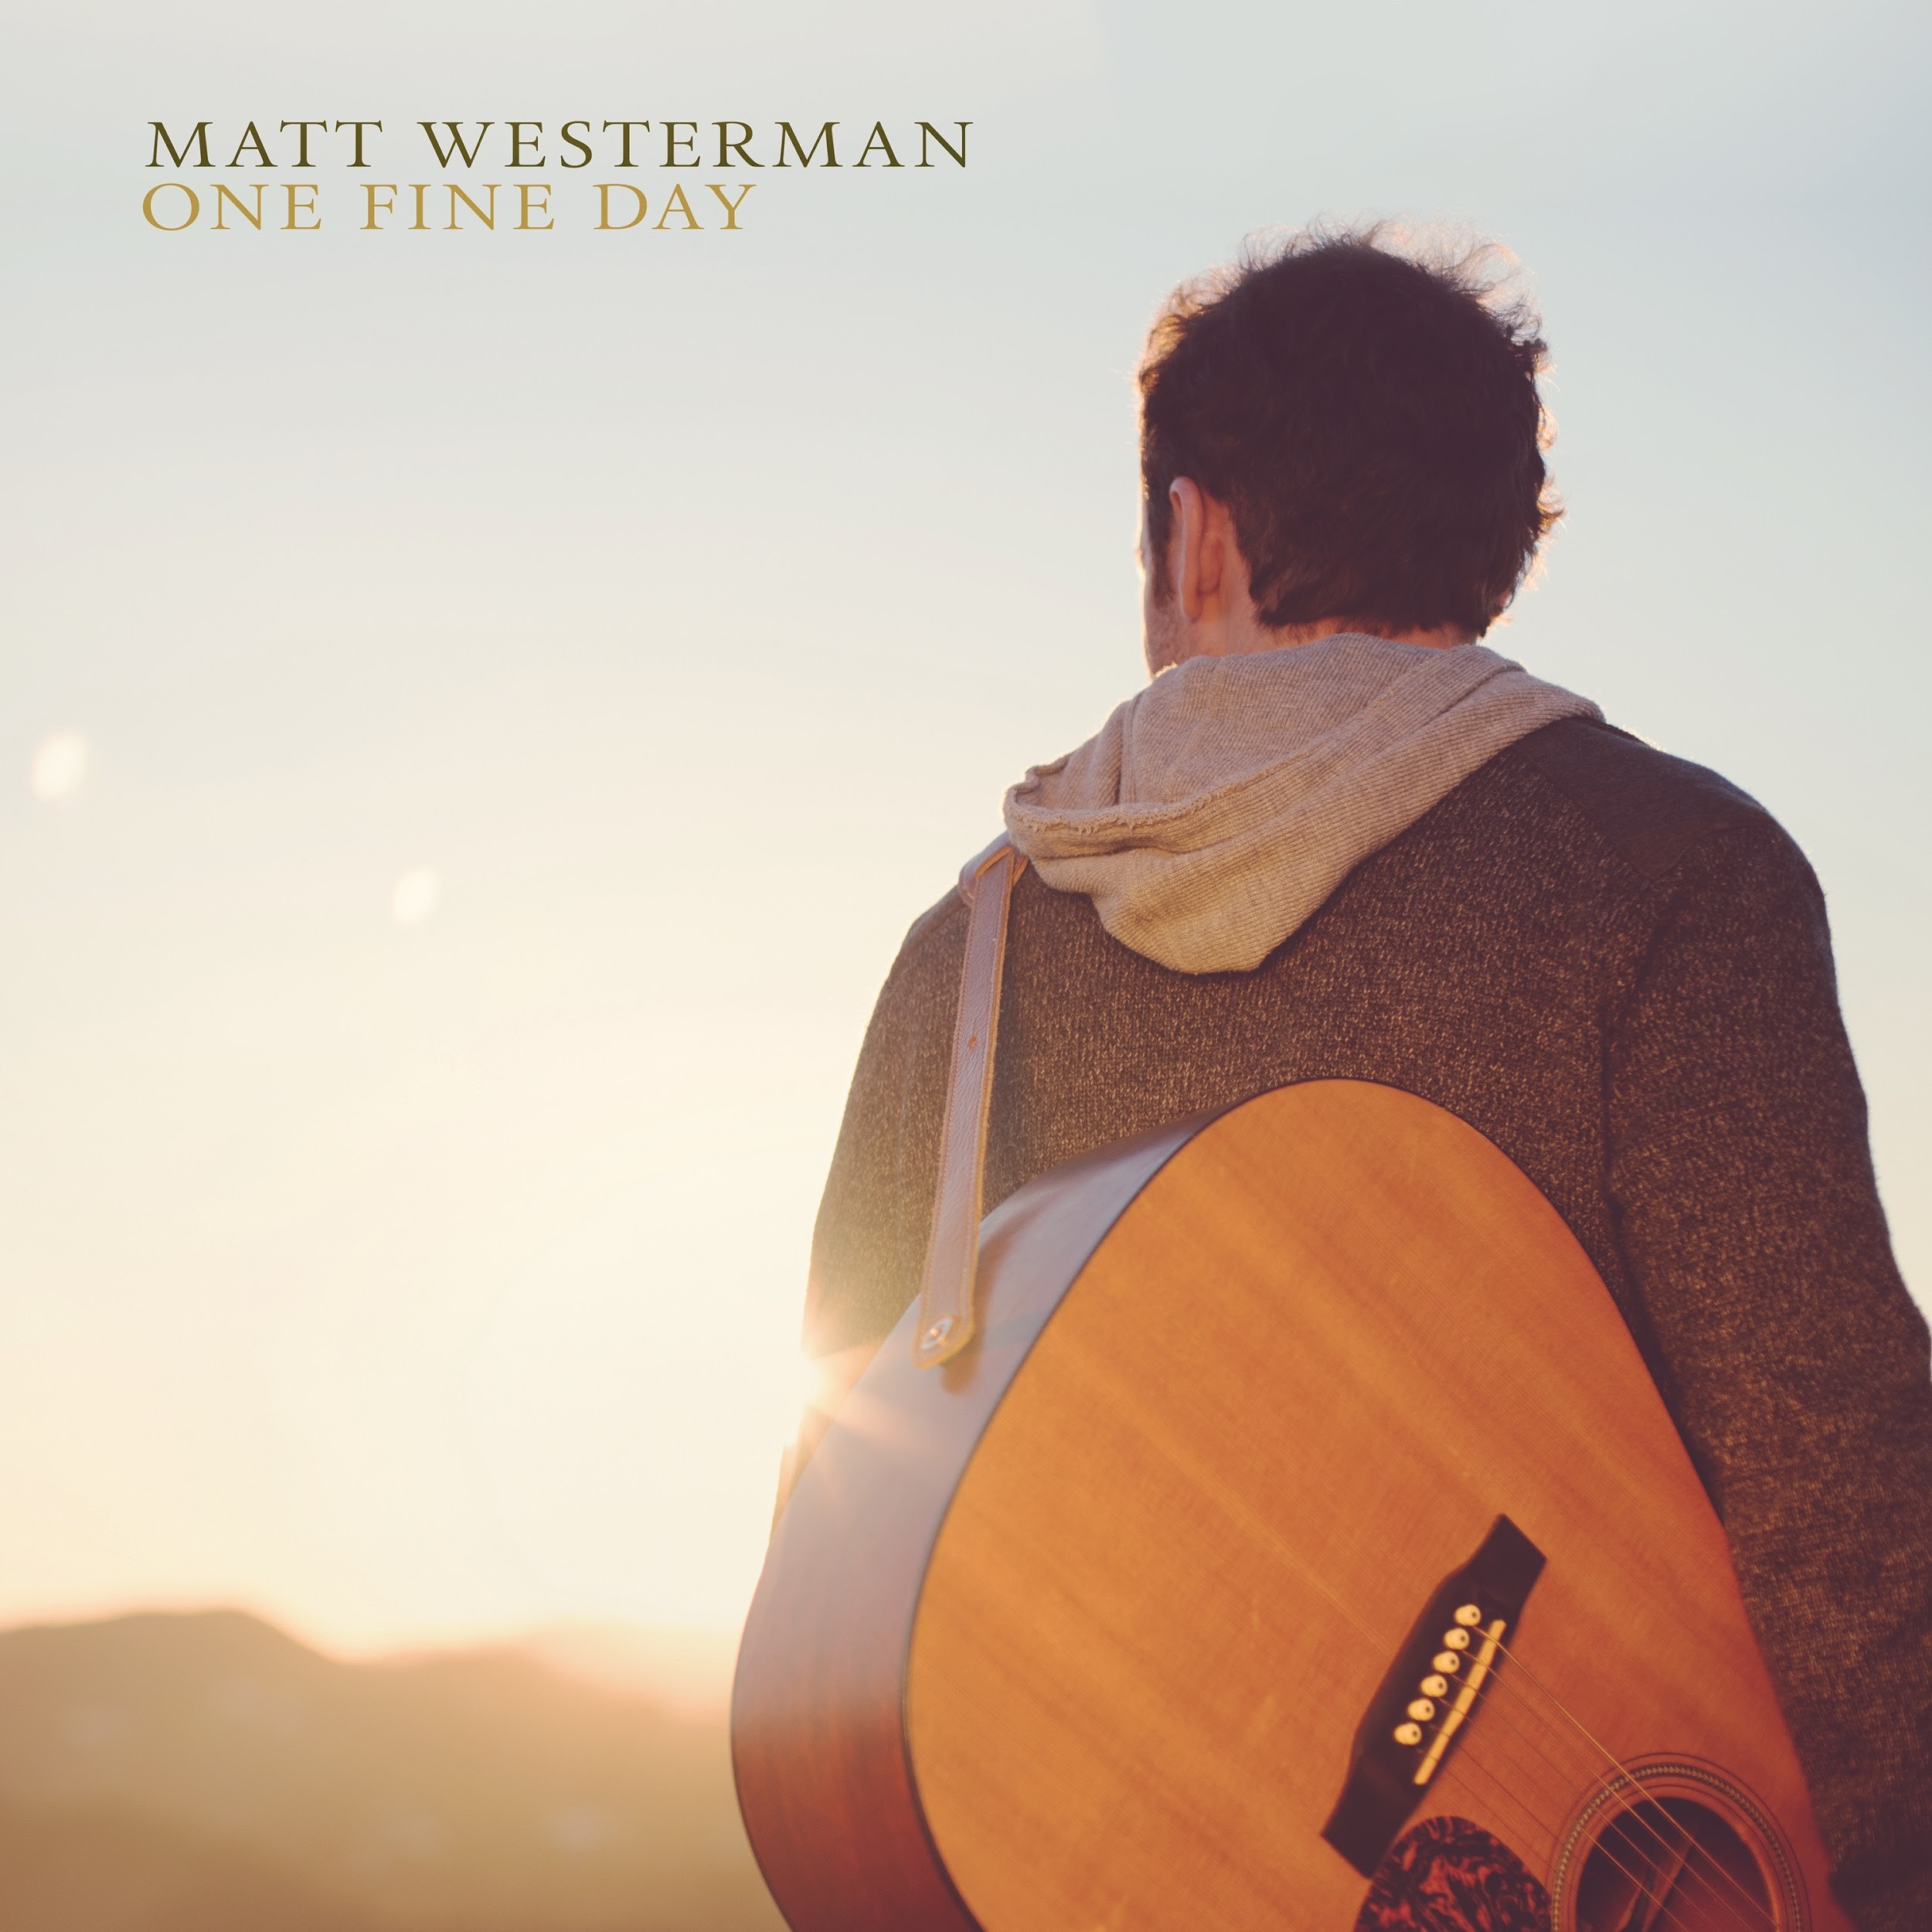 Matt Westerman premieres new single